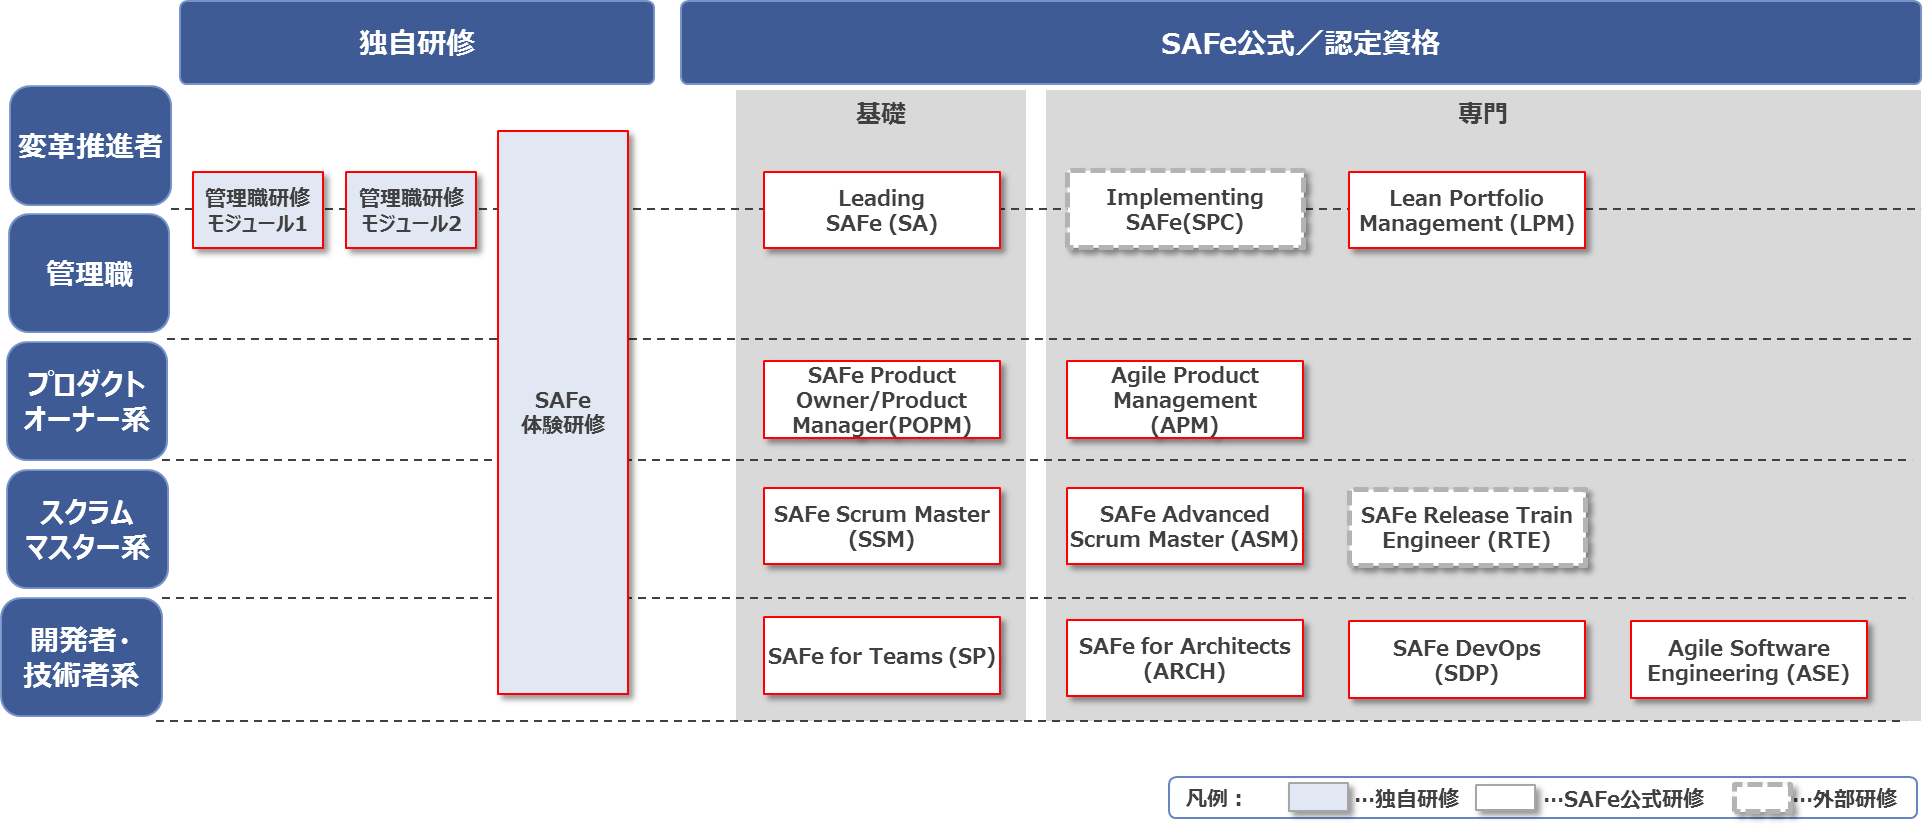 Figure 2: Positioning of management mindset change training and SAFe-related training